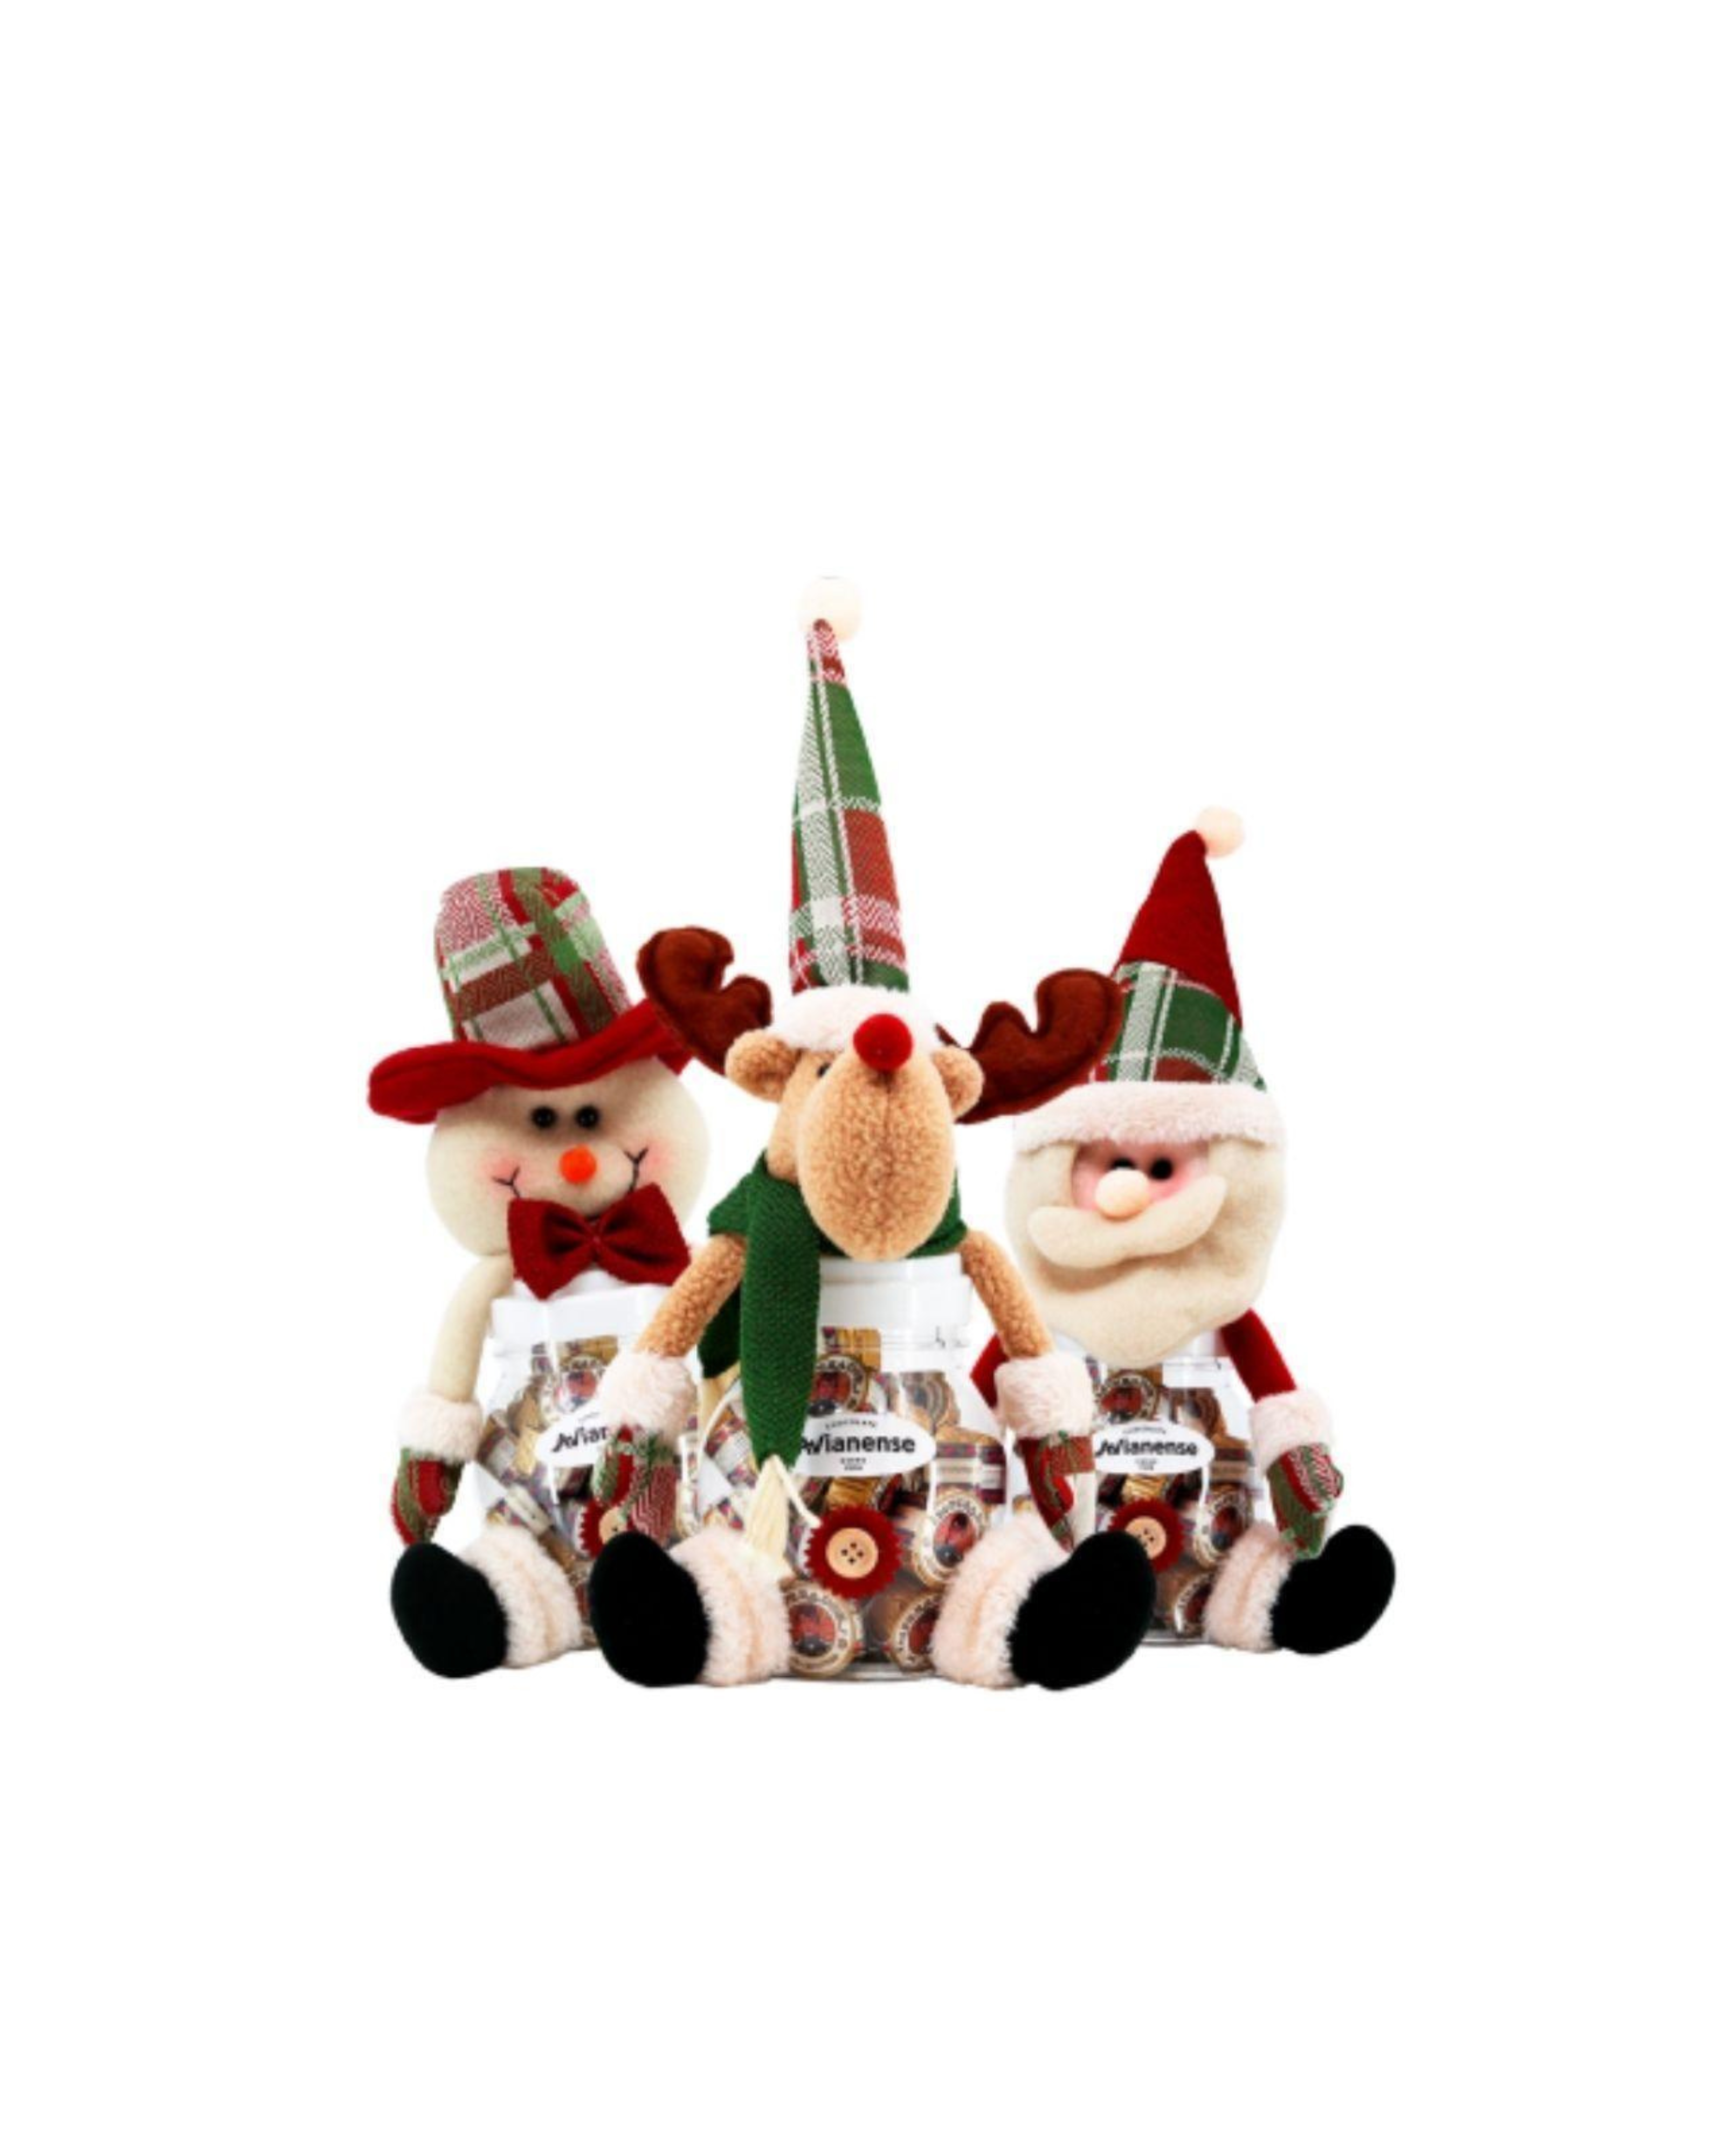 Christmas Dolls with Avianense Chocolate Candies 350g